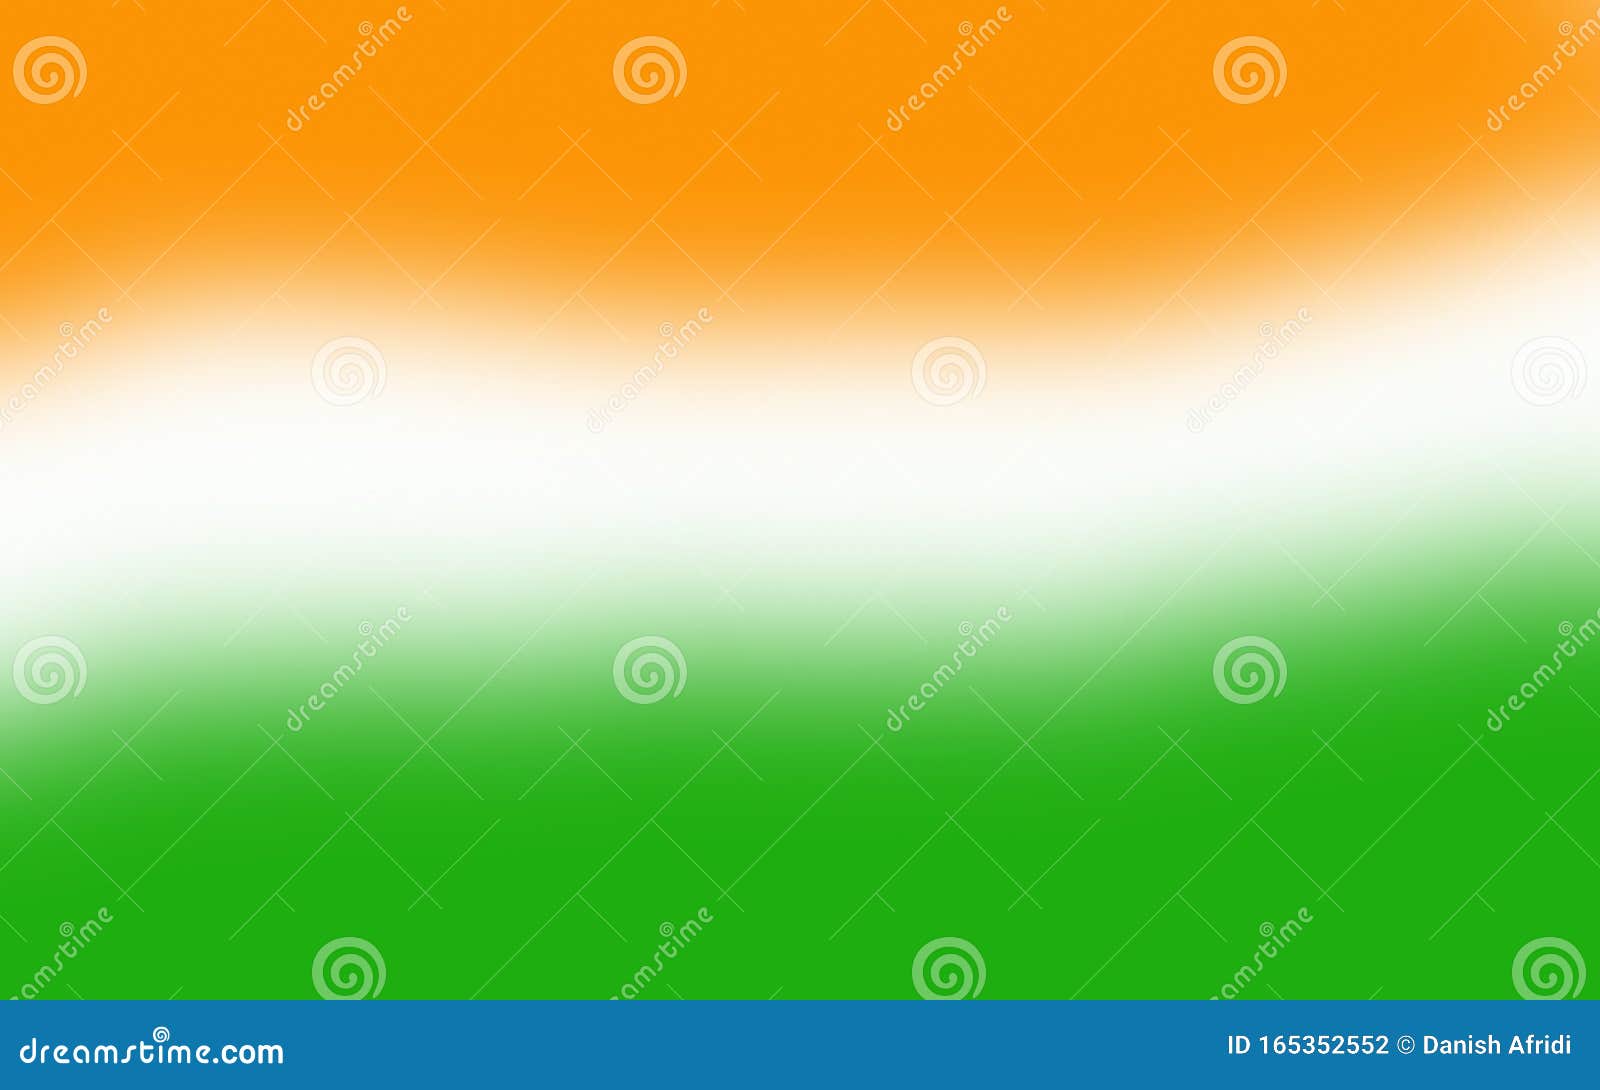 3D Tiranga Flag Image Free Download HD Wallpaper - Allpicts | Indian flag  wallpaper, Indian flag images, Indian flag